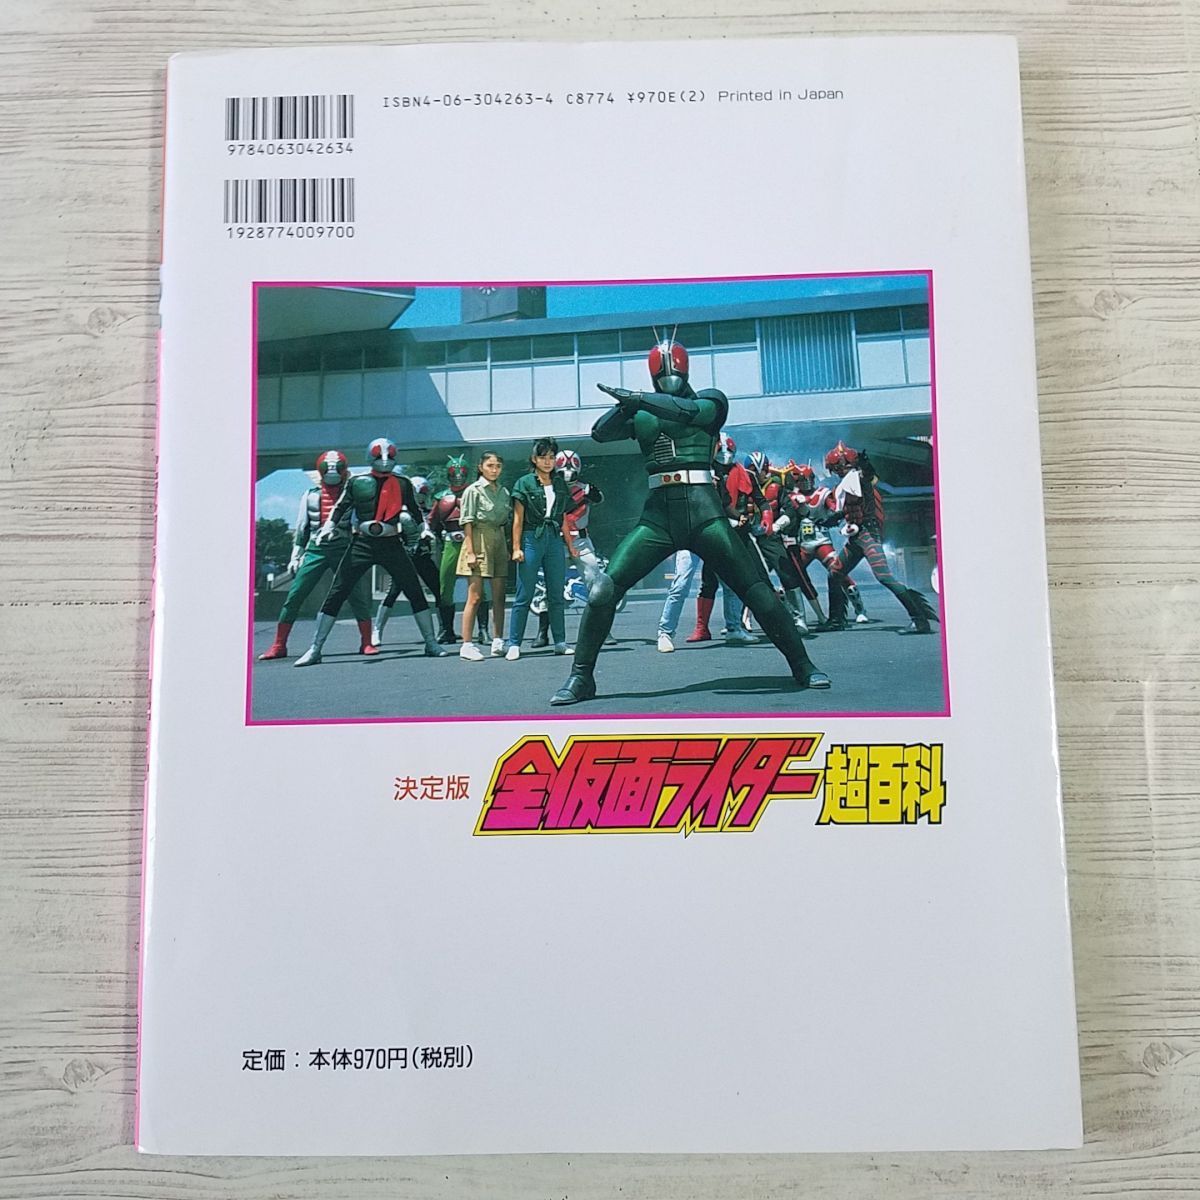  special effects series [ all Kamen Rider super various subjects ] tv magazine Deluxe 13 Showa era rider Kamen Rider birth 20 anniversary commemoration 